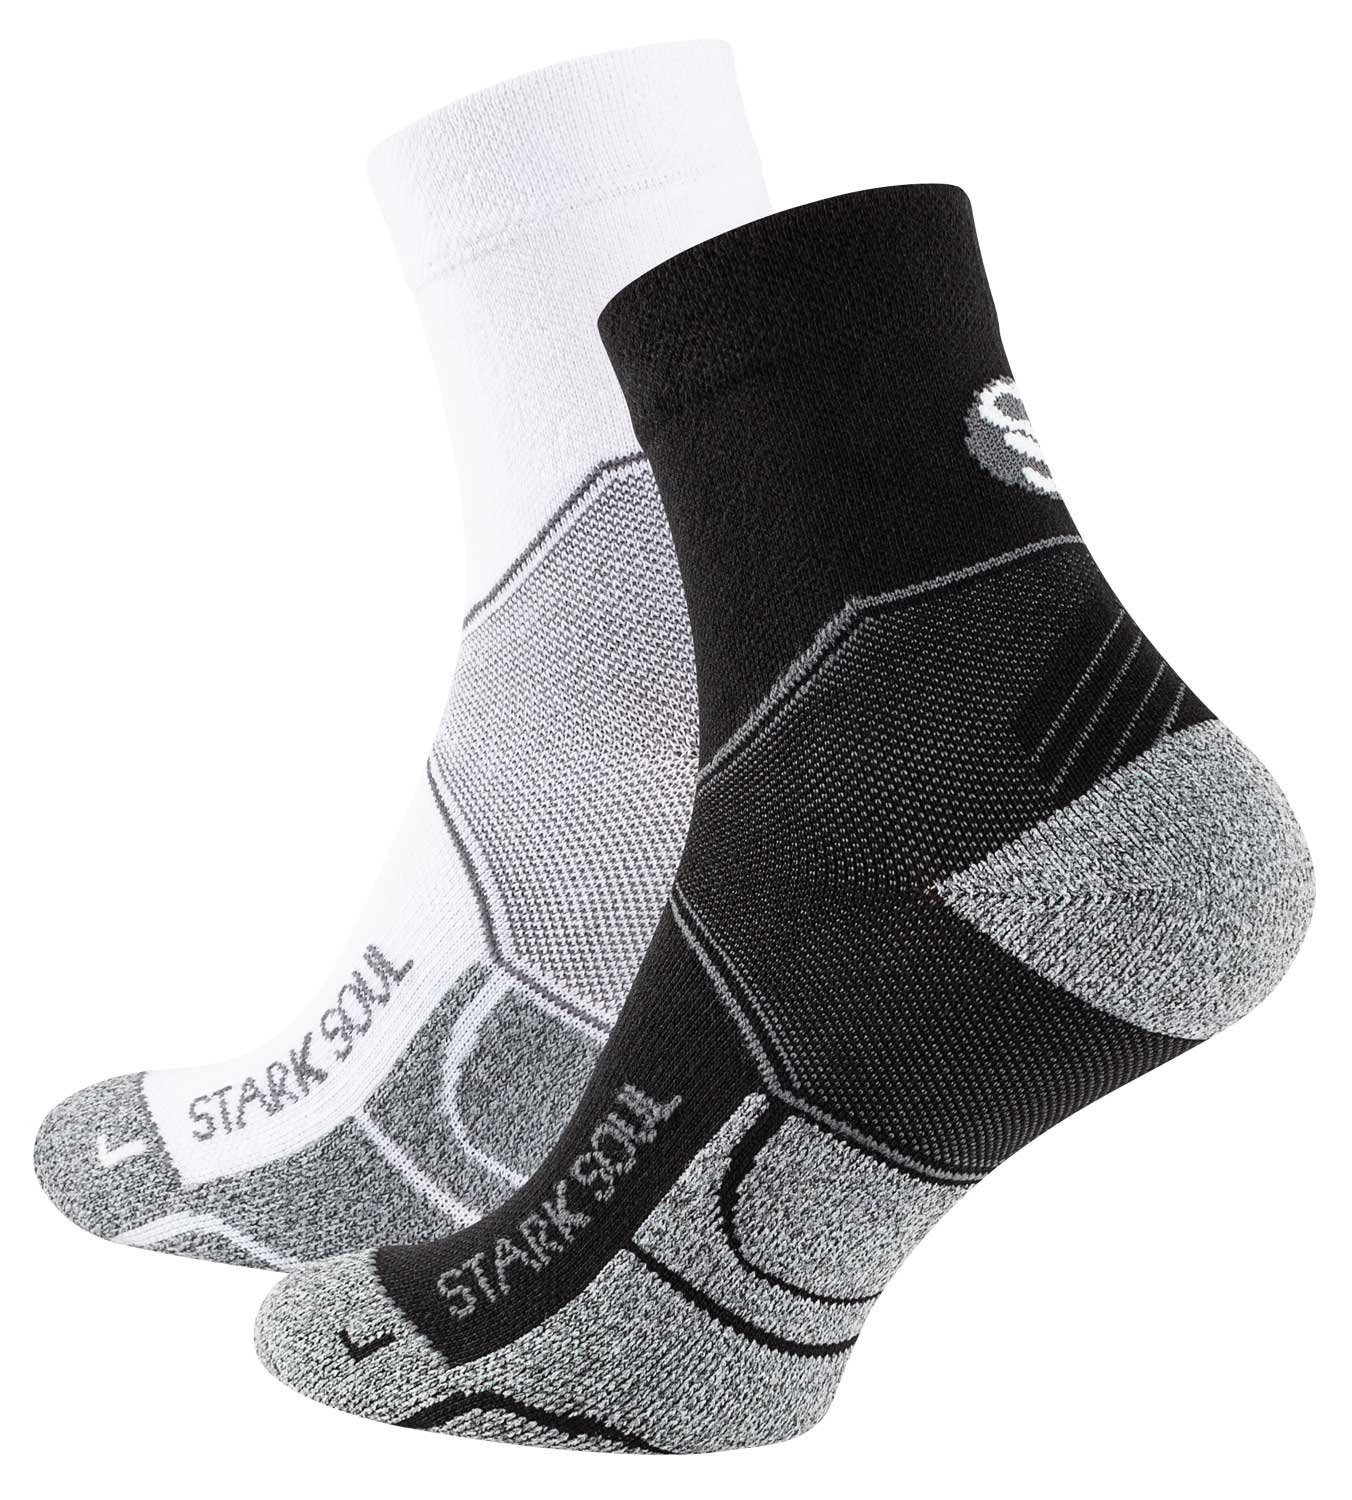 Stark Soul® Laufsocken Quarter Sport Socken, Performance - 2 Paar Laufsocken (2 Paar) Gepolsterte Sohle schwarz-weiss